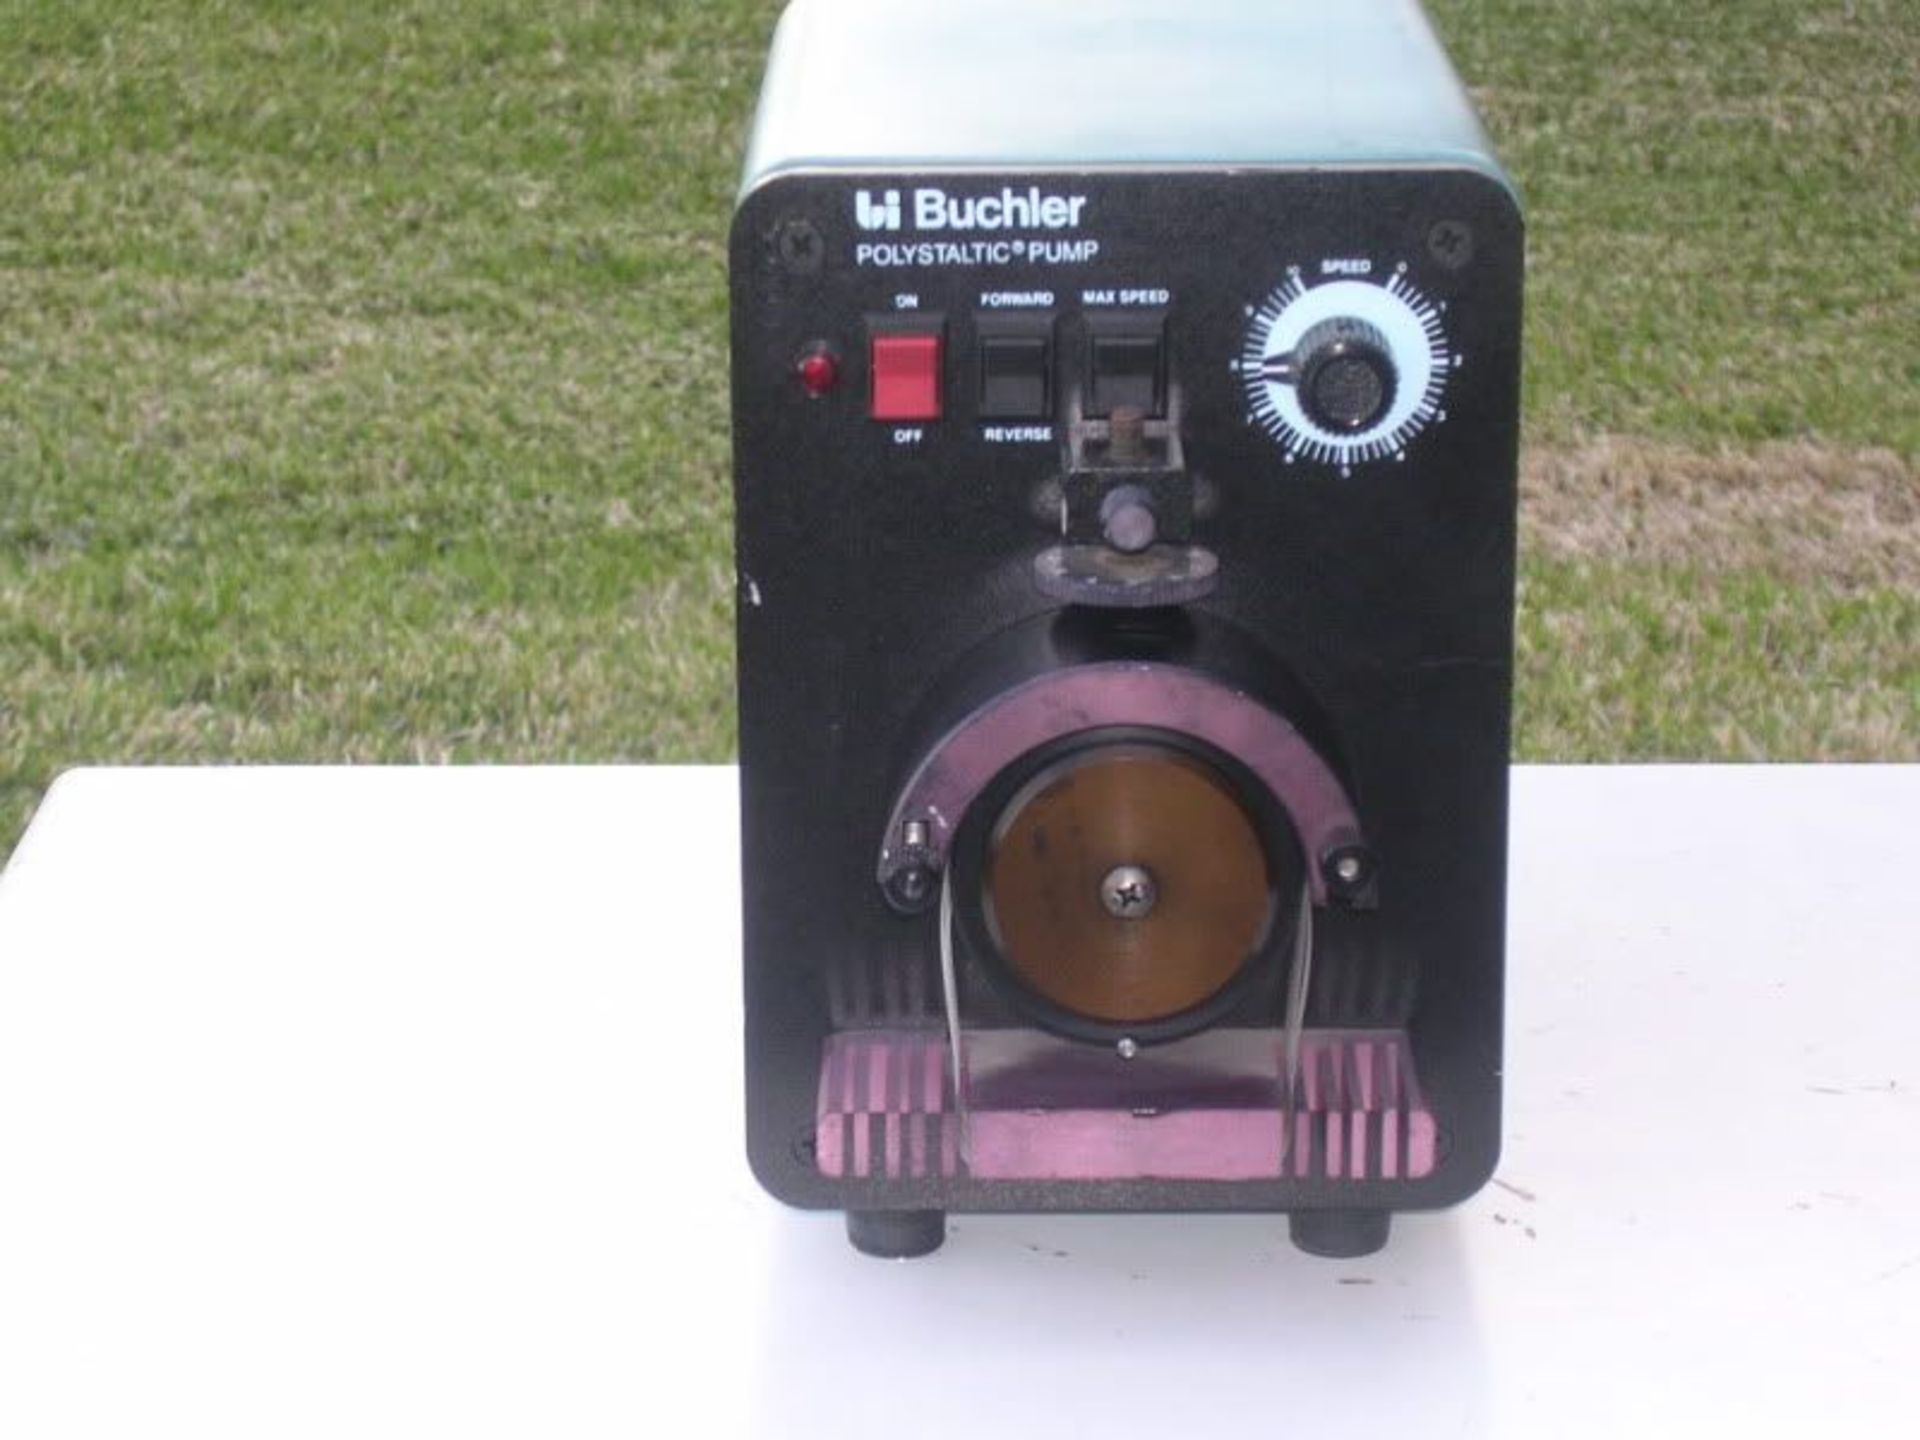 Haake Buchler Polystaltic Pump Model 426-1000 For / Rev, Qty 1, 222227663825 - Image 7 of 12